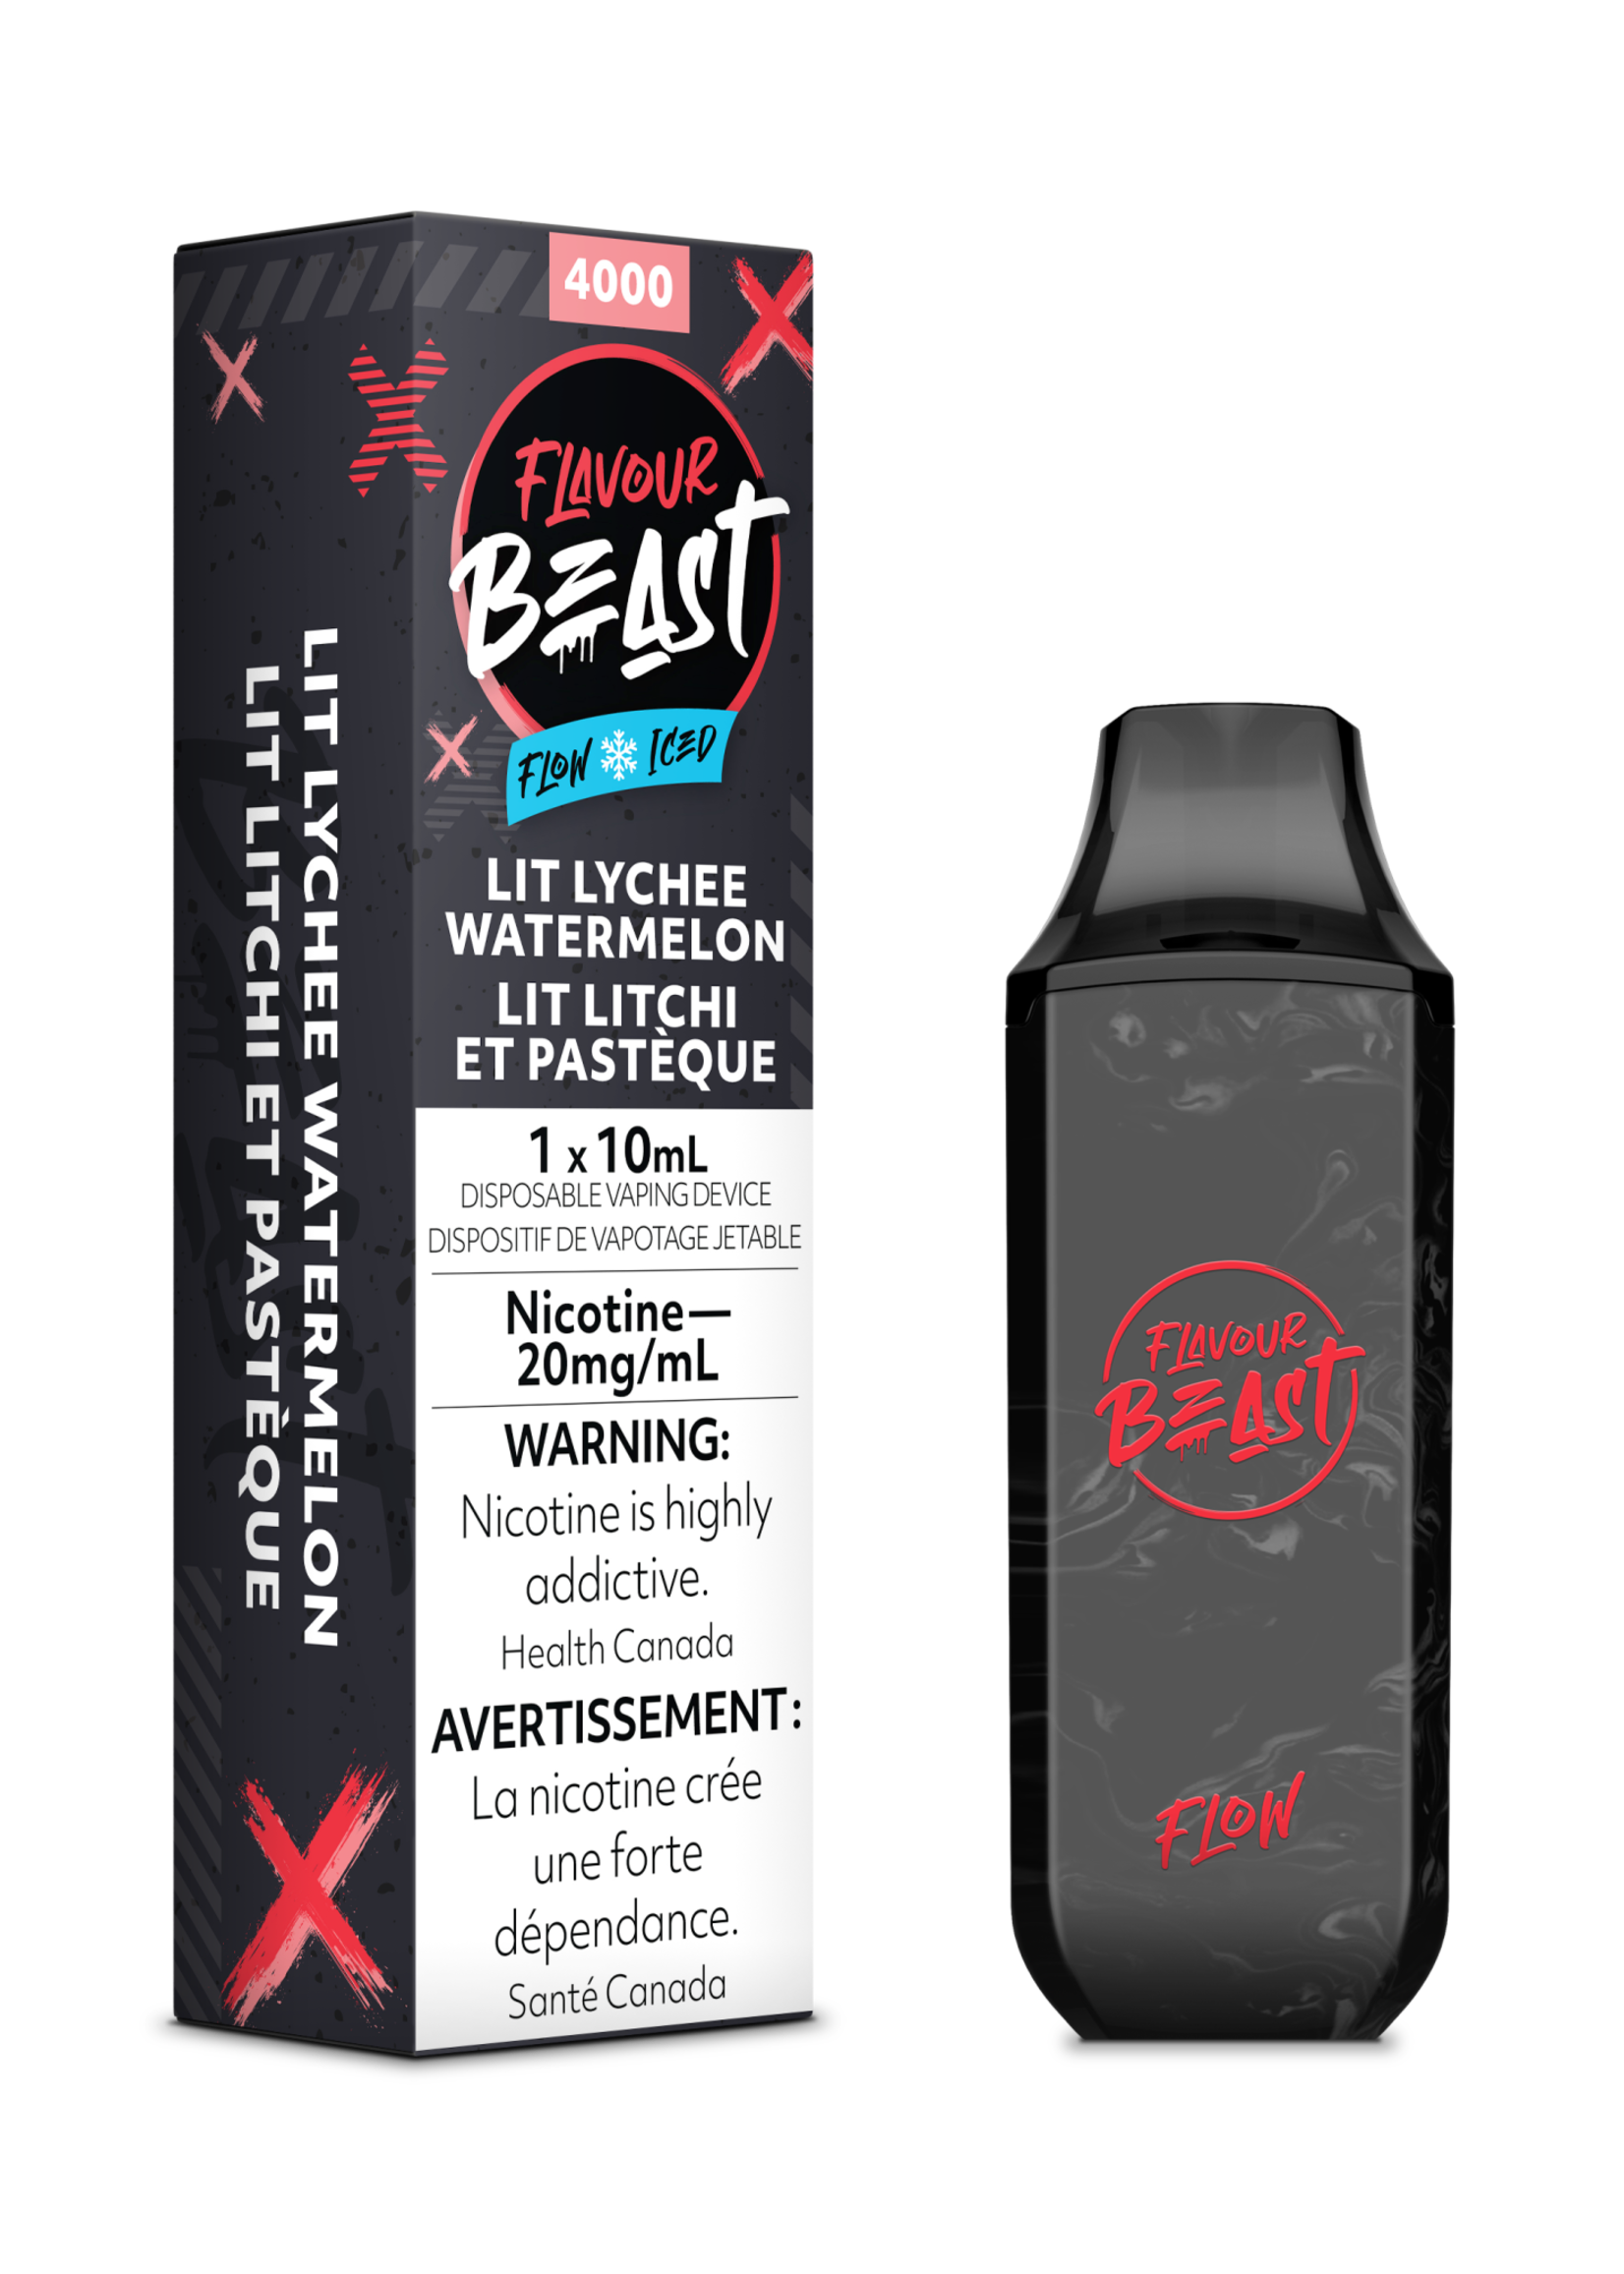 Flavour Beast Lit Lychee Watermelon - Flavour Beast Flow